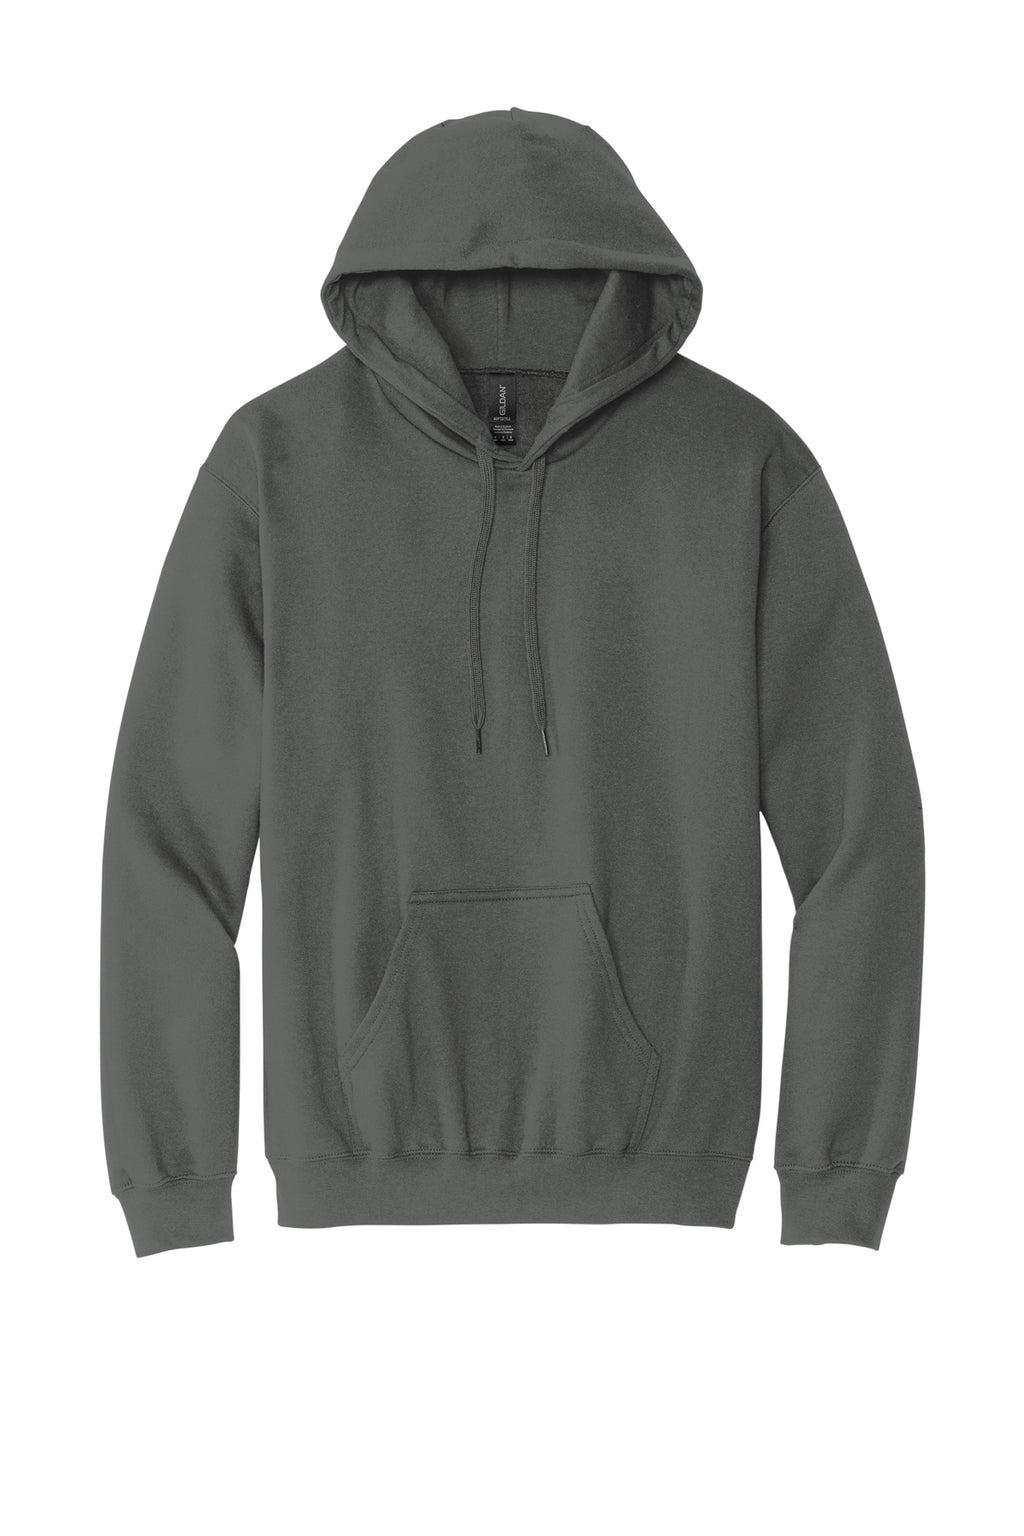 Gildan Soft touch Hooded Sweatshirt Mens/Unisex Hoodies Charcoal